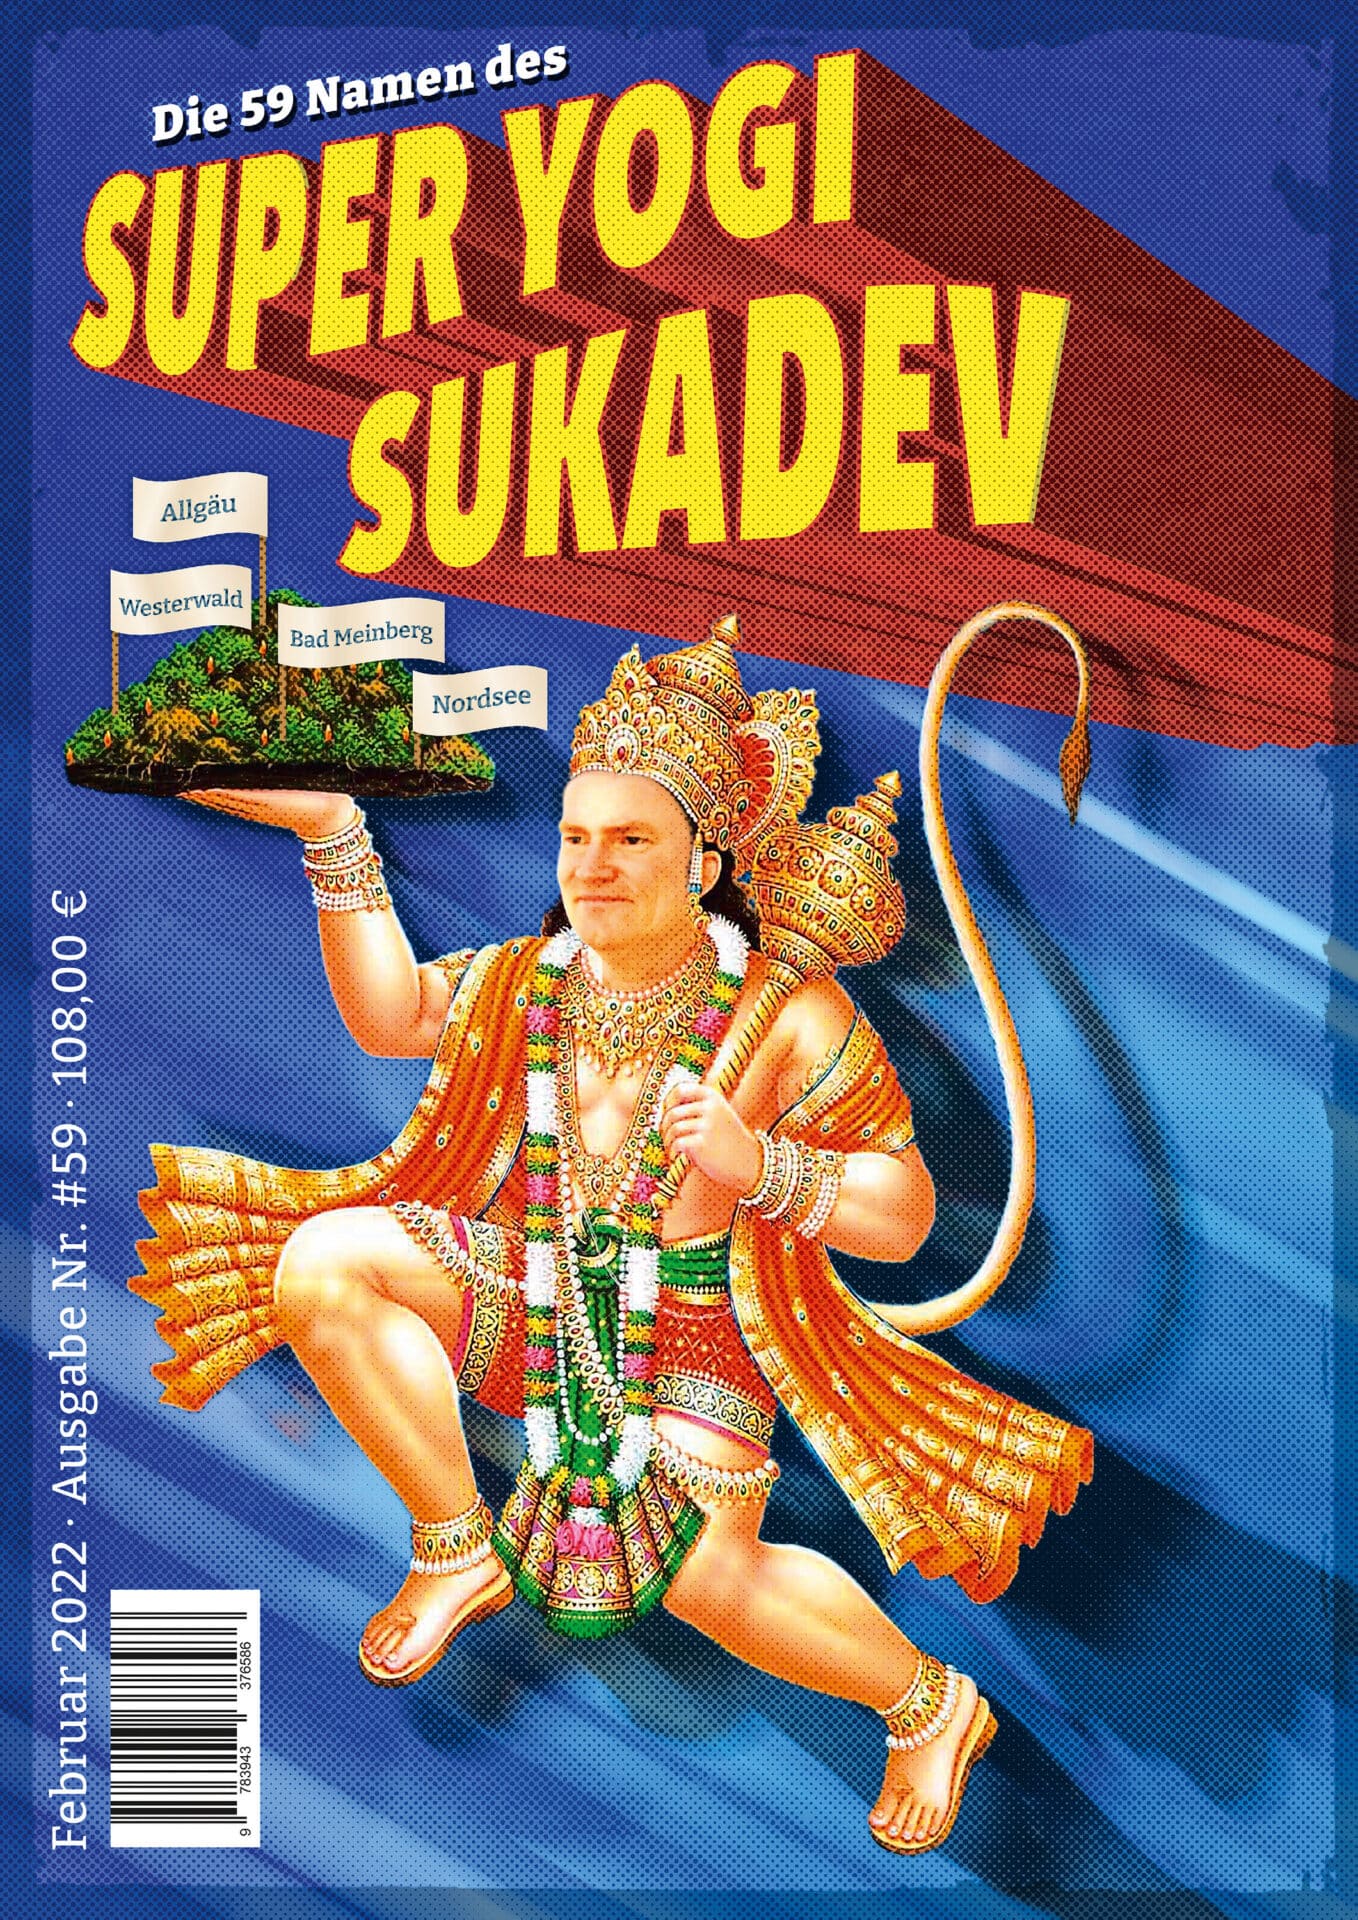 Die 59 Namen des Super Yogi Sukadev S.1